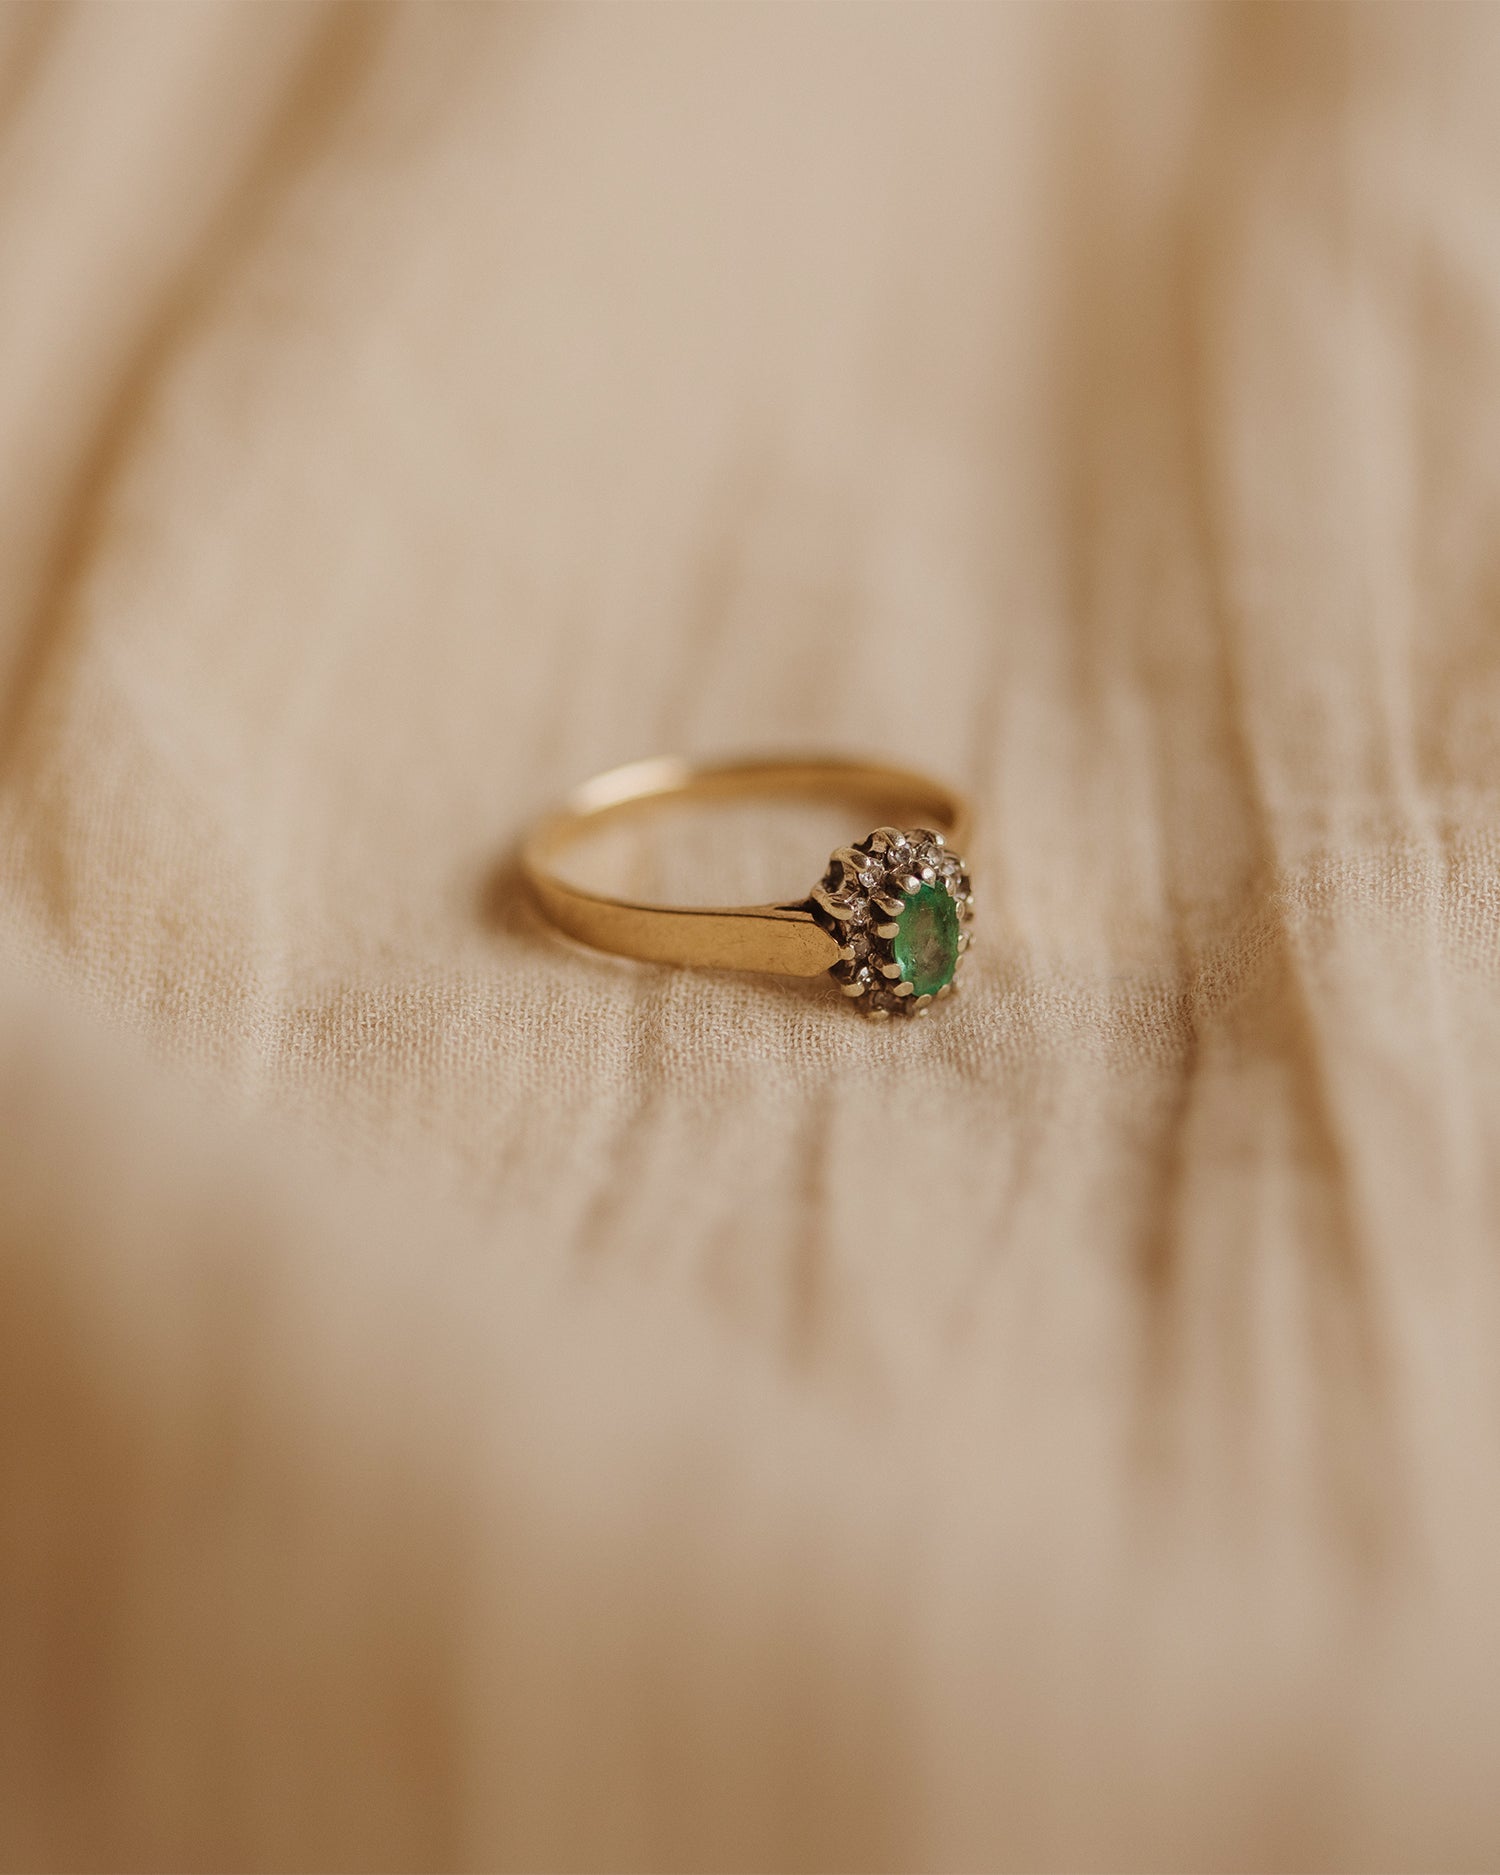 Marjorie 1984 9ct Gold Vintage Emerald & Diamond Ring